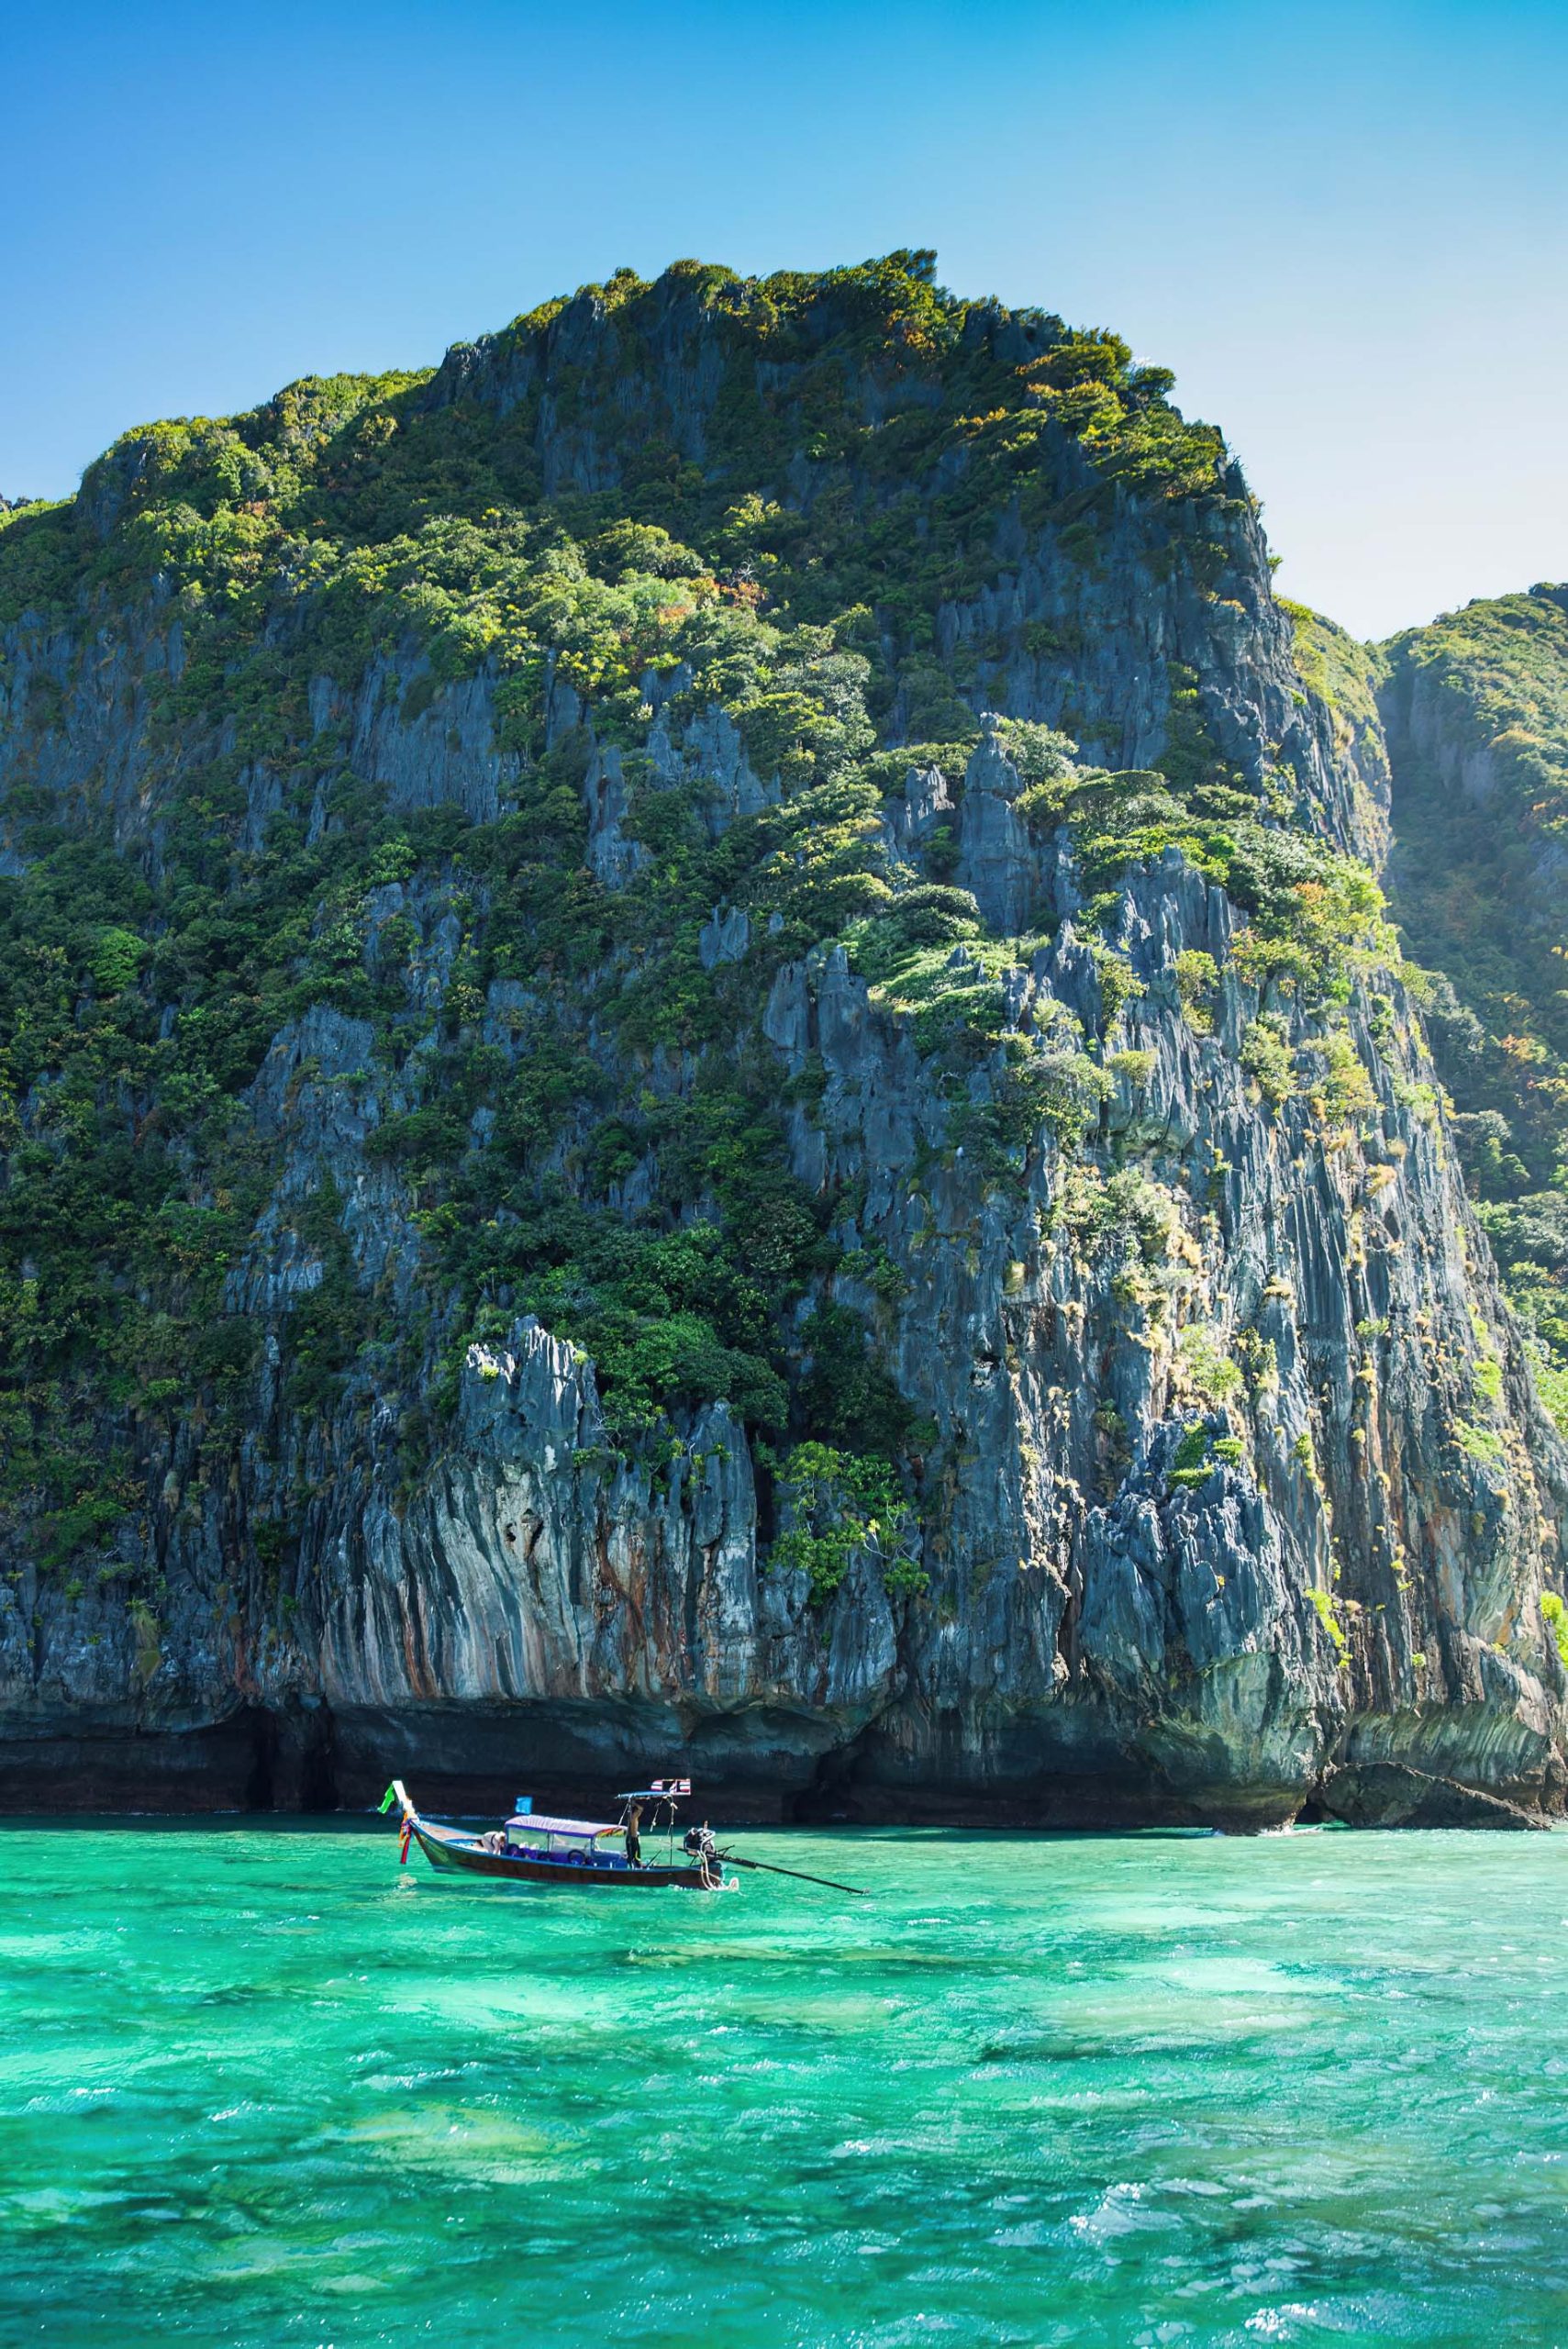 The Ritz-Carlton, Phulay Bay Reserve Resort – Muang Krabi, Thailand – Four Islands National Park Boating